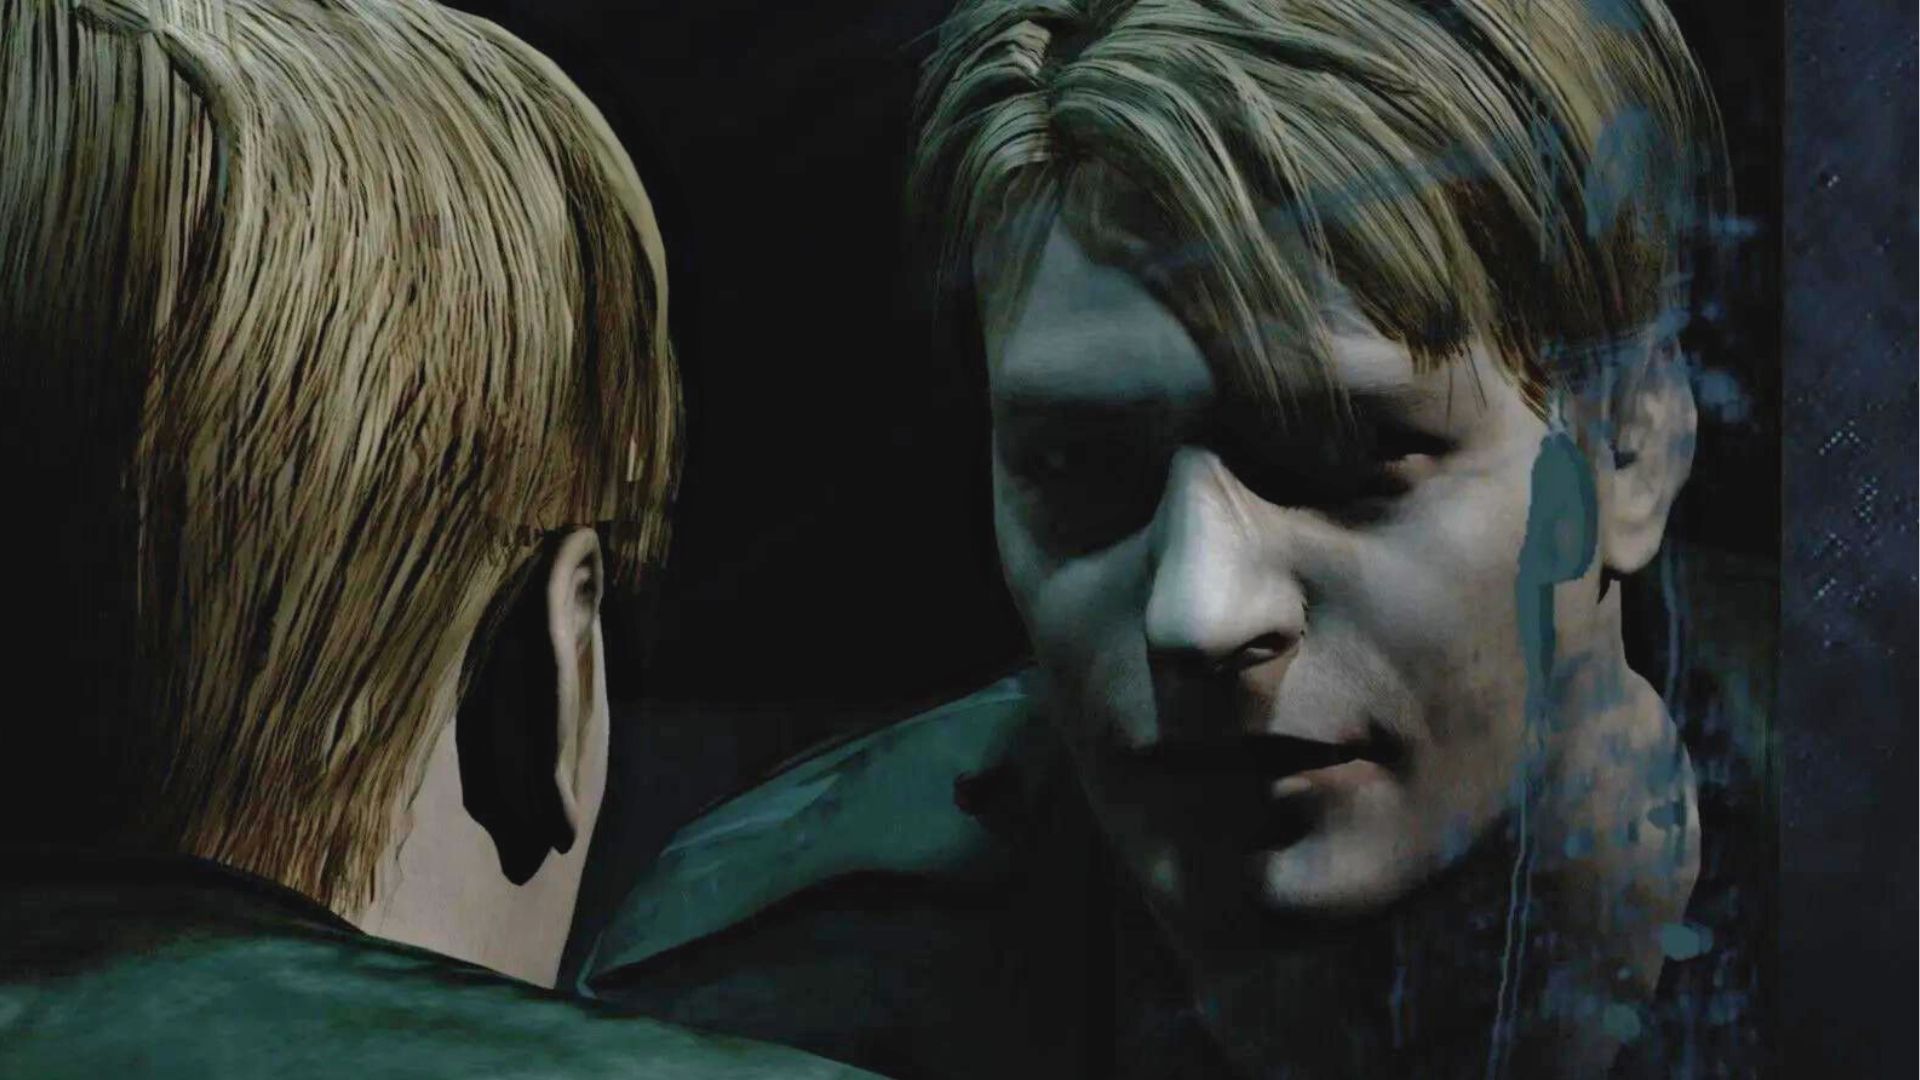 Silent Hill 2 art director denounces fourth wall break as “headcanon”